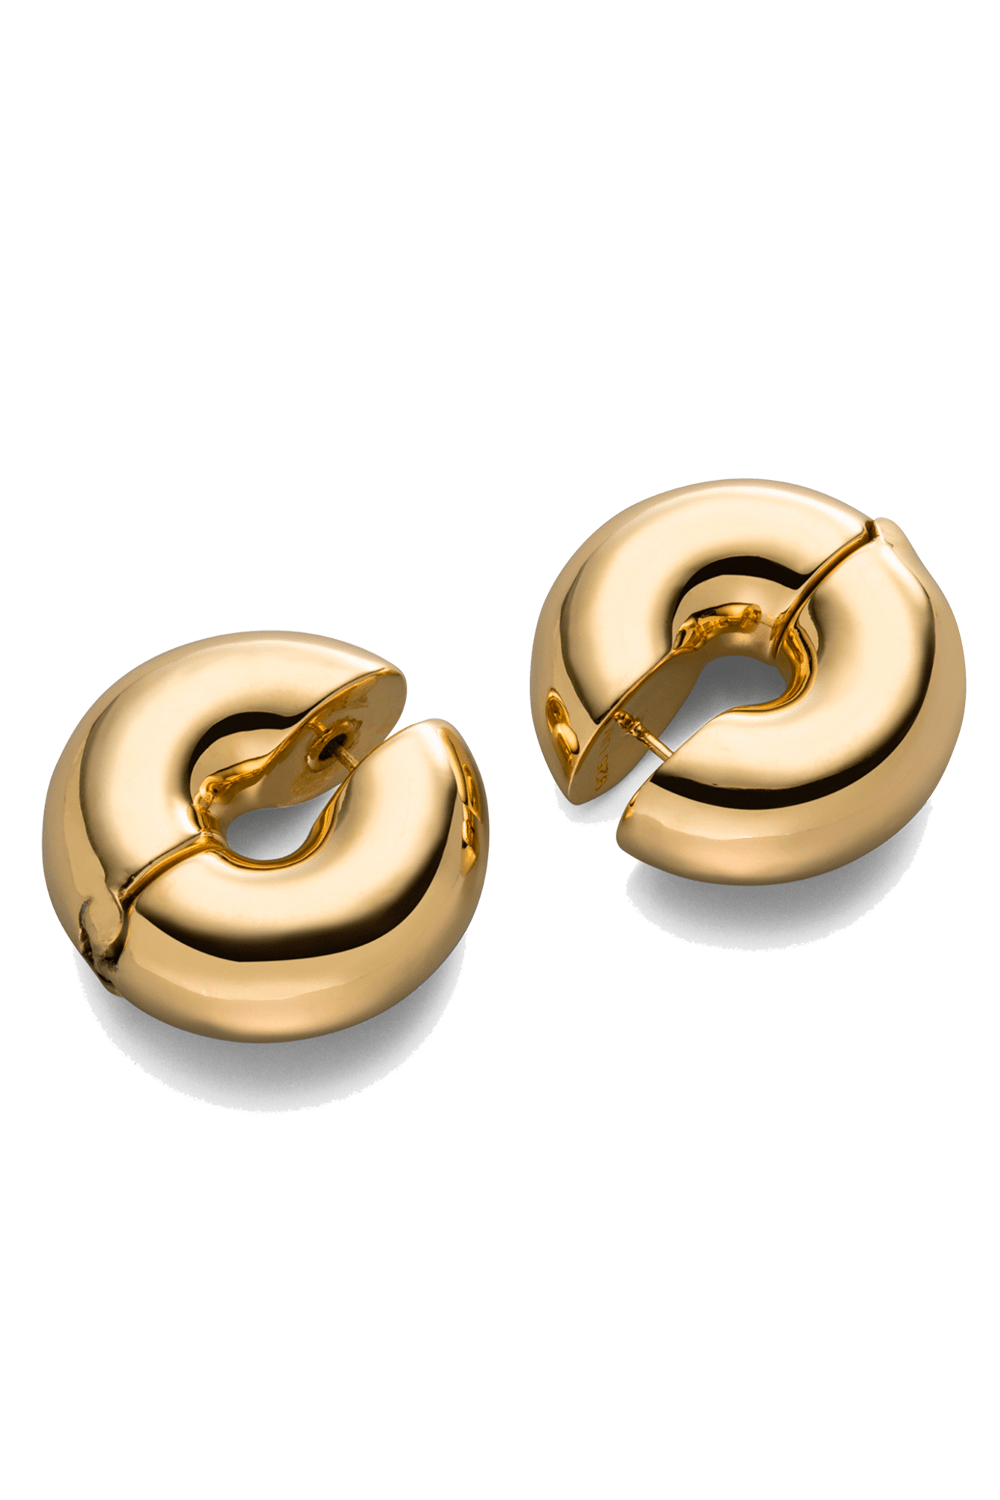 UNCOMMON MATTERS-Stratus Hoop Earrings-GOLD